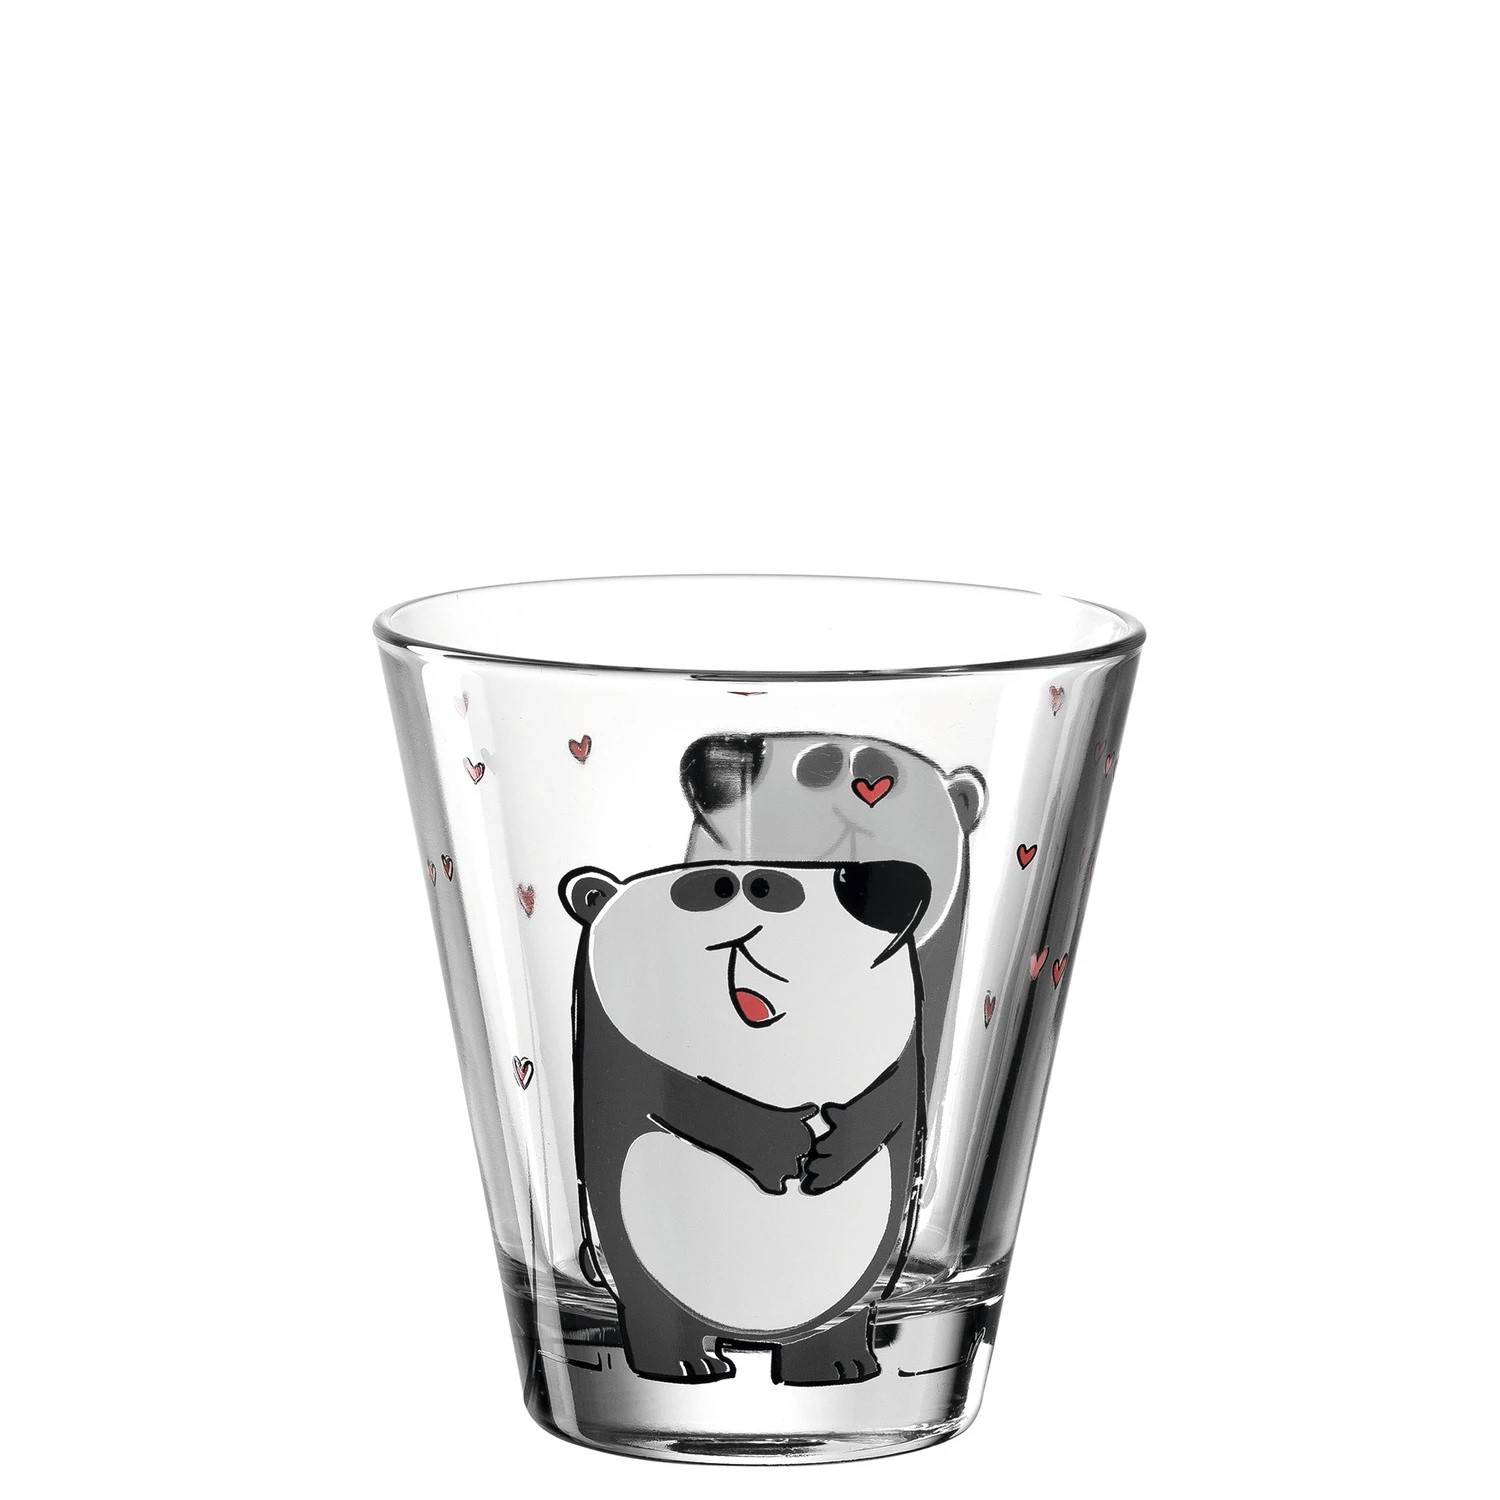 Leonardo Bambini Kinderbecher 215ml Motiv: Panda, 120 ml Nutzinhalt Durchmesser 85mm, Höhe 90mm